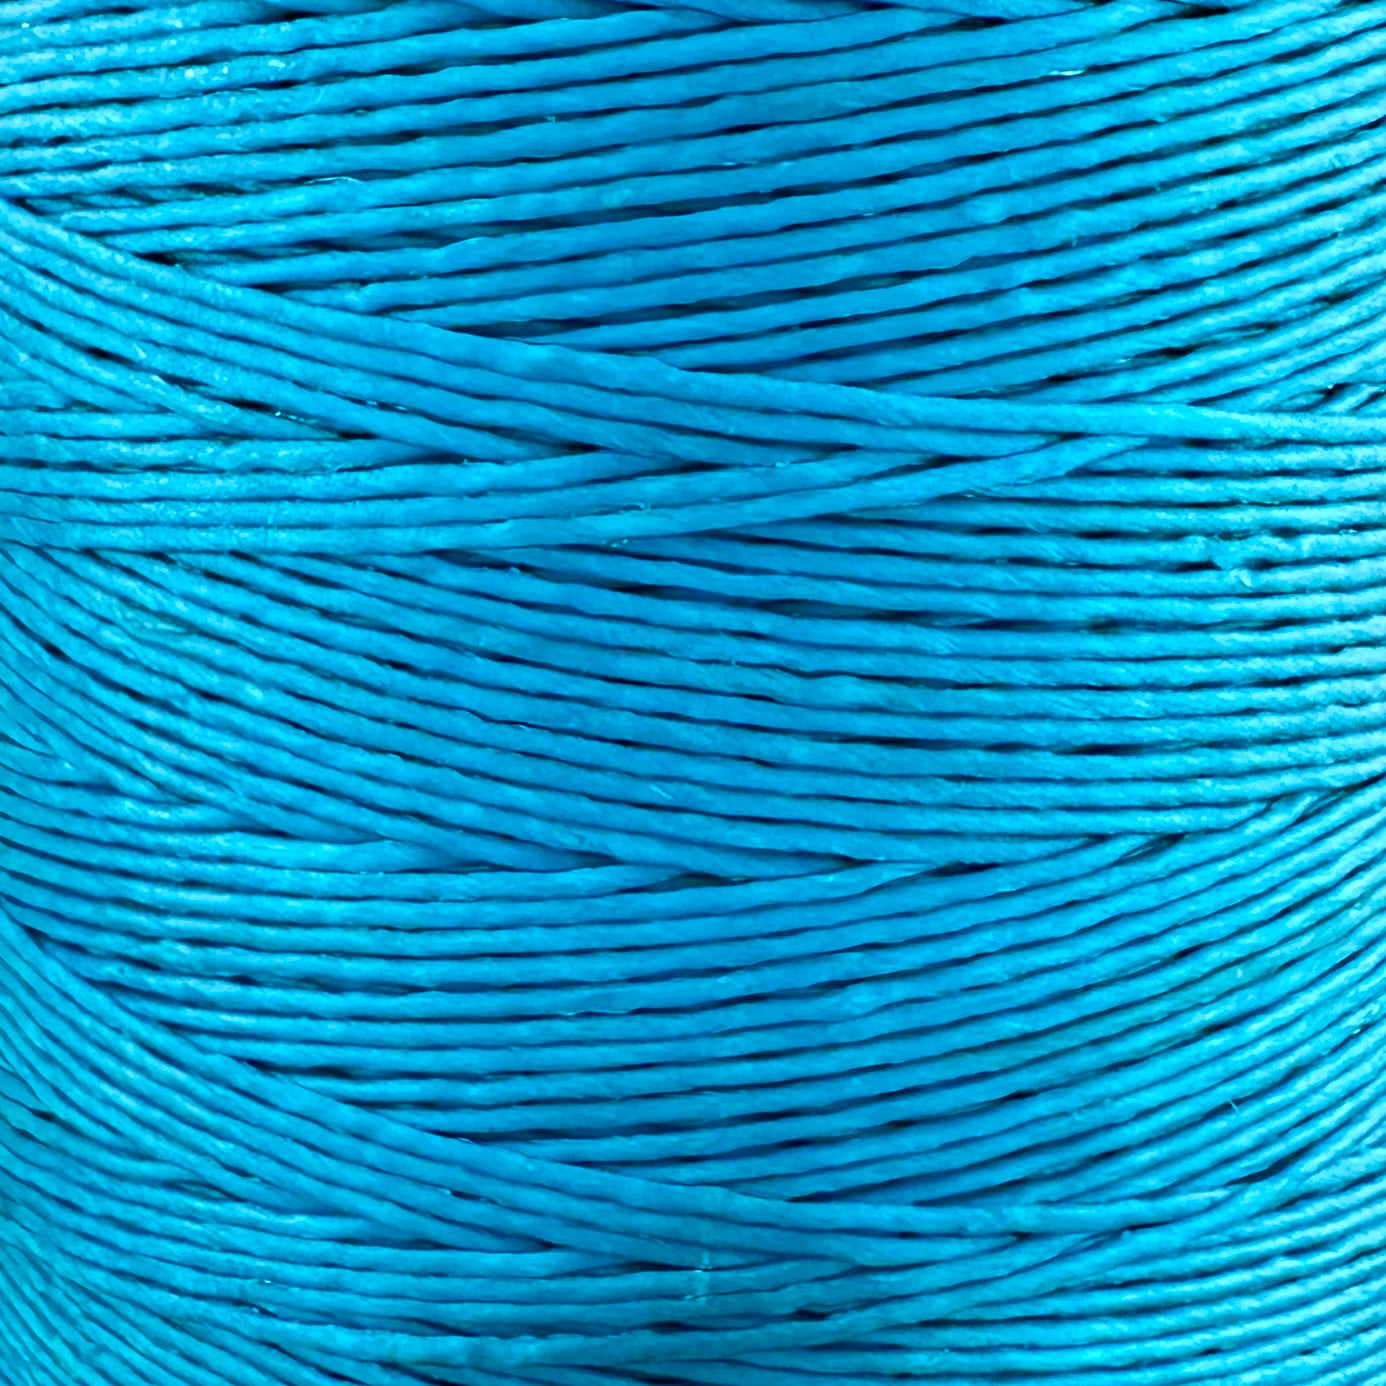 600 Meter Macrame Cord Spool - Aqua Blue